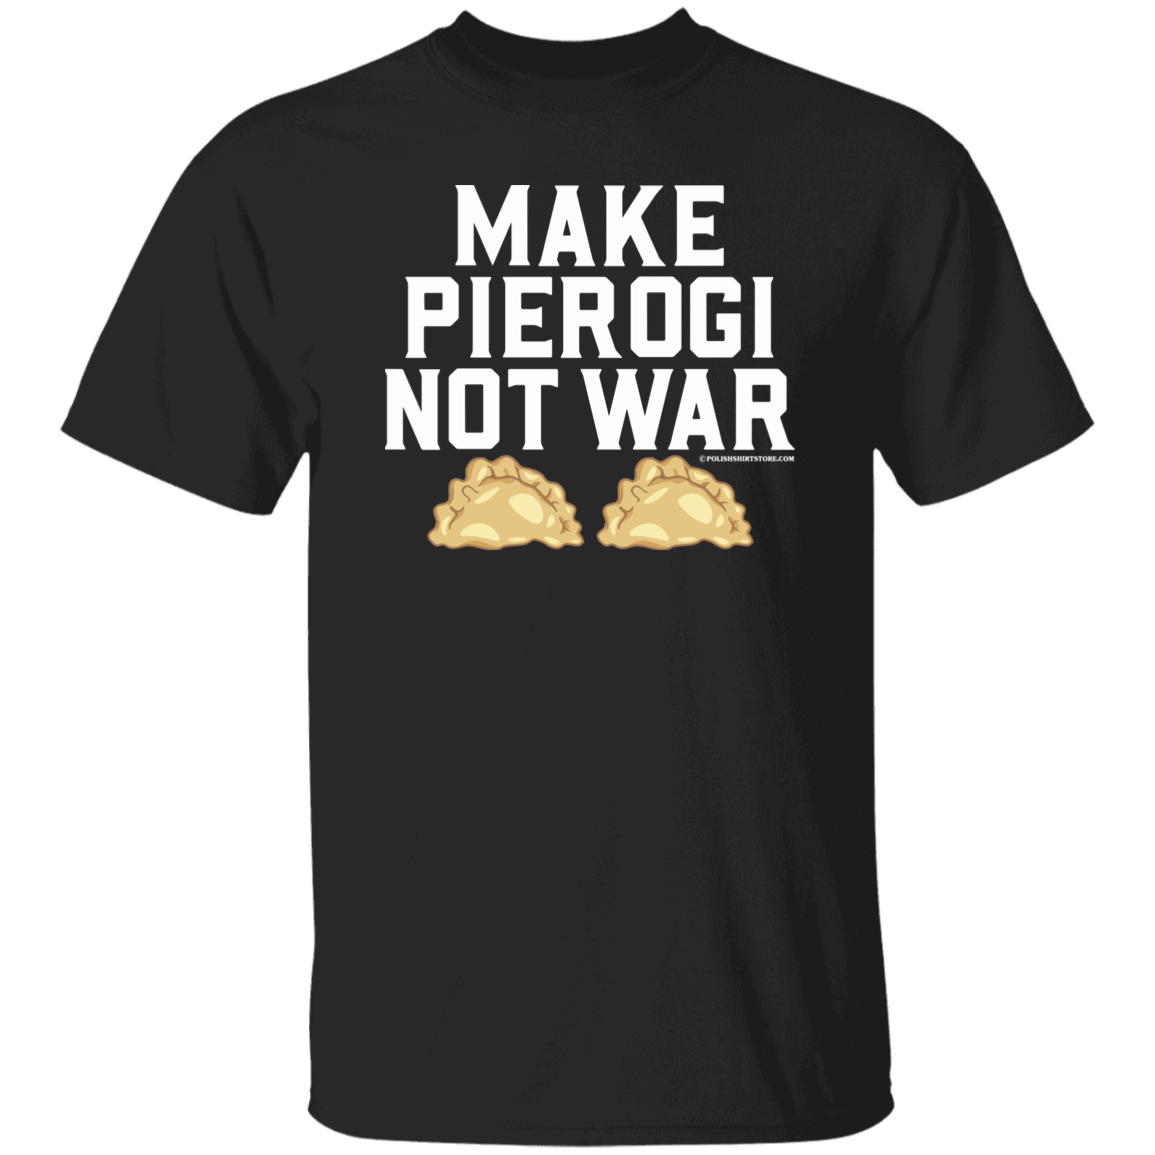 Make Pierogi Not War Apparel CustomCat G500 5.3 oz. T-Shirt Black S